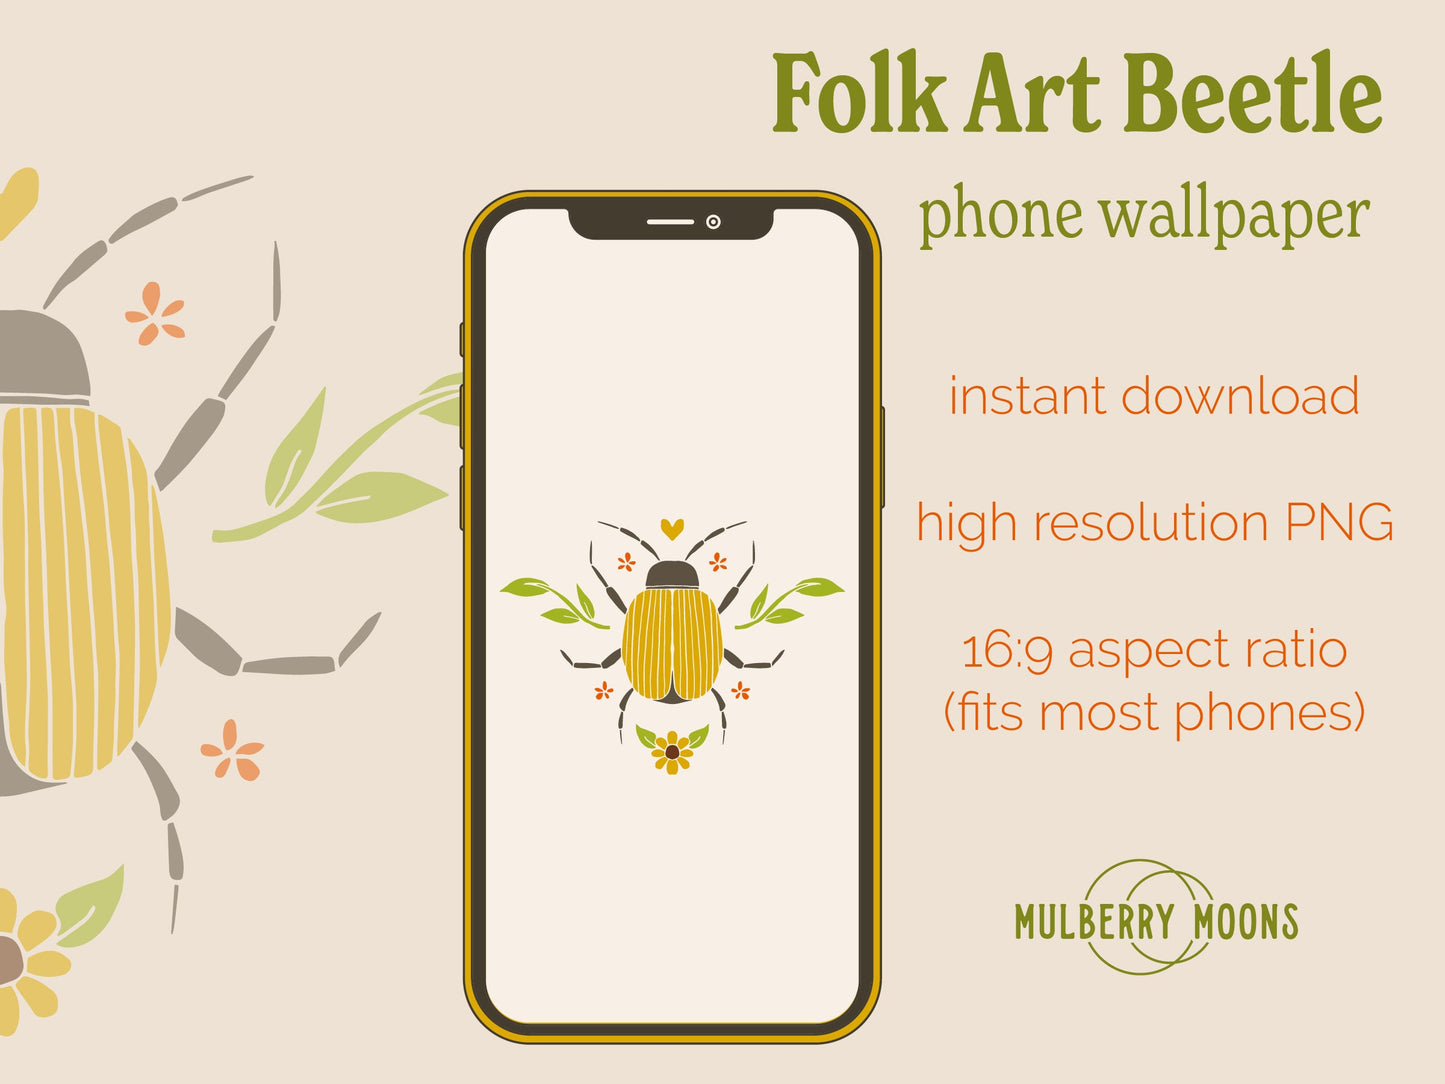 Phone Wallpaper - Folk Art Beetle